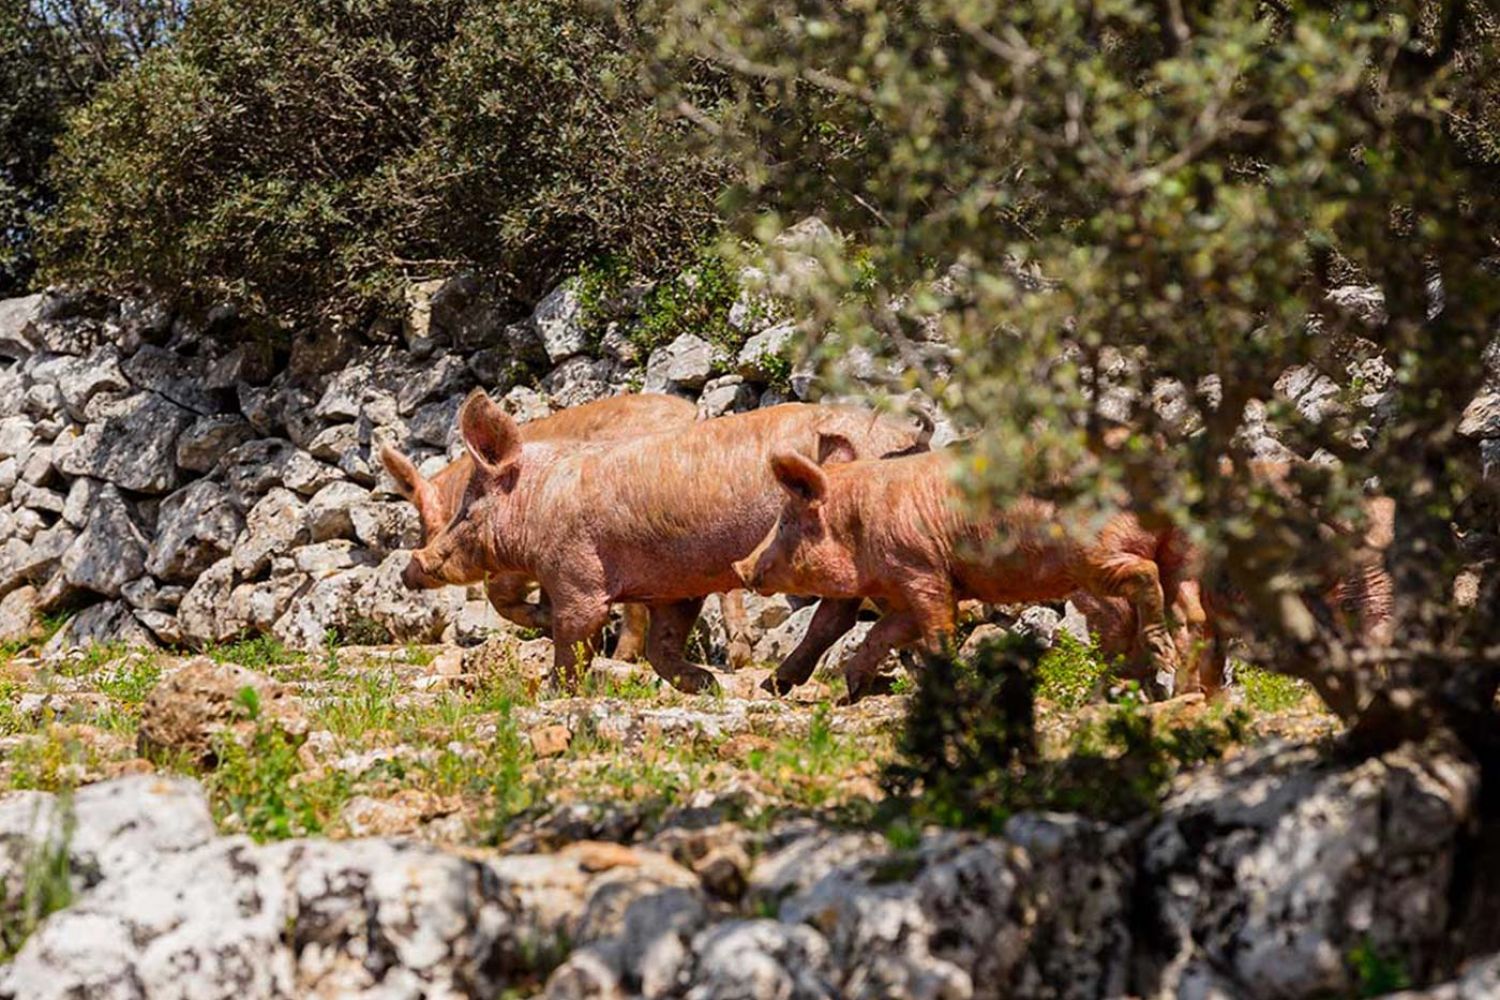 swines grazing in a semi-wild state in Valle d'itria